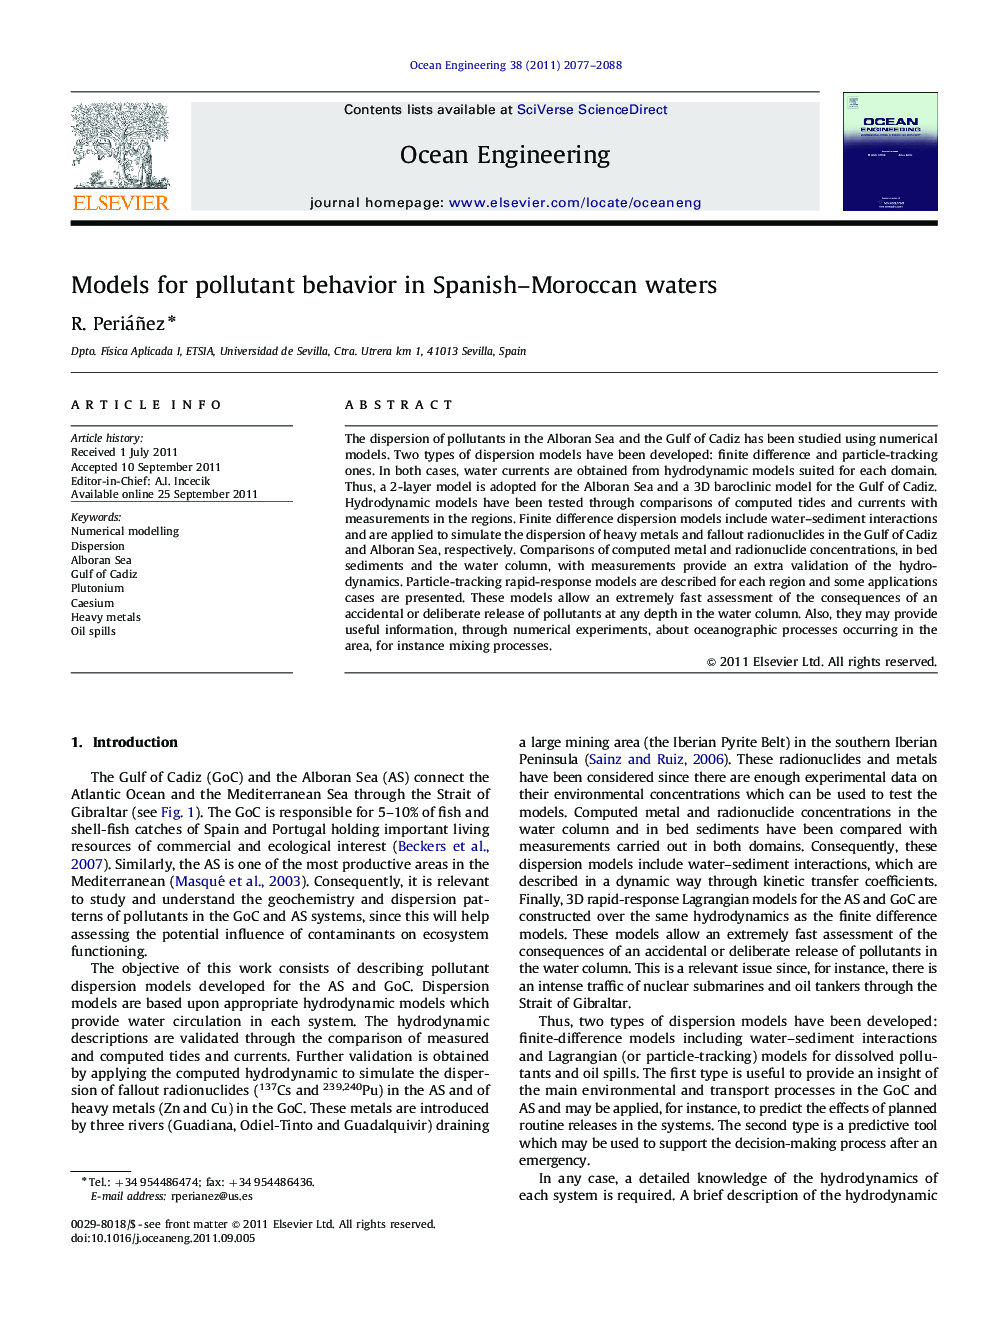 Models for pollutant behavior in Spanish–Moroccan waters